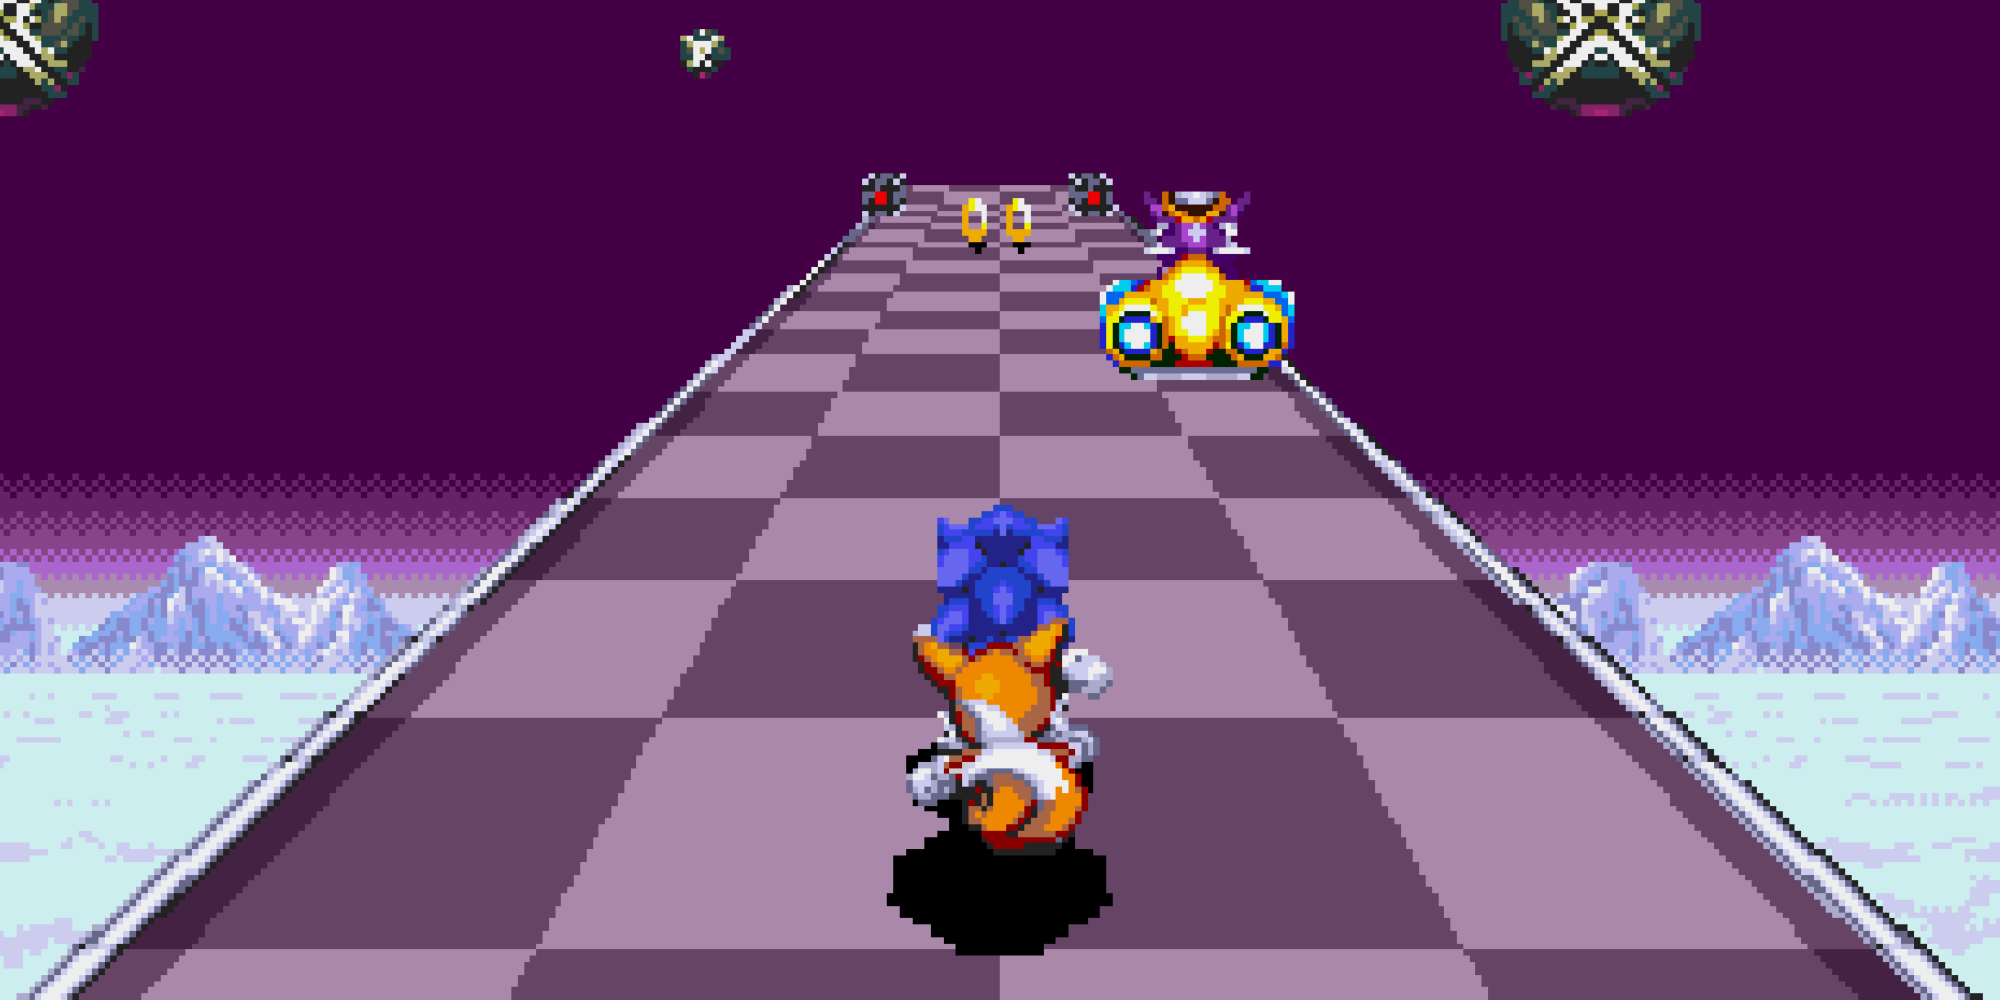 Sonic Chaos 16 Bit Remake